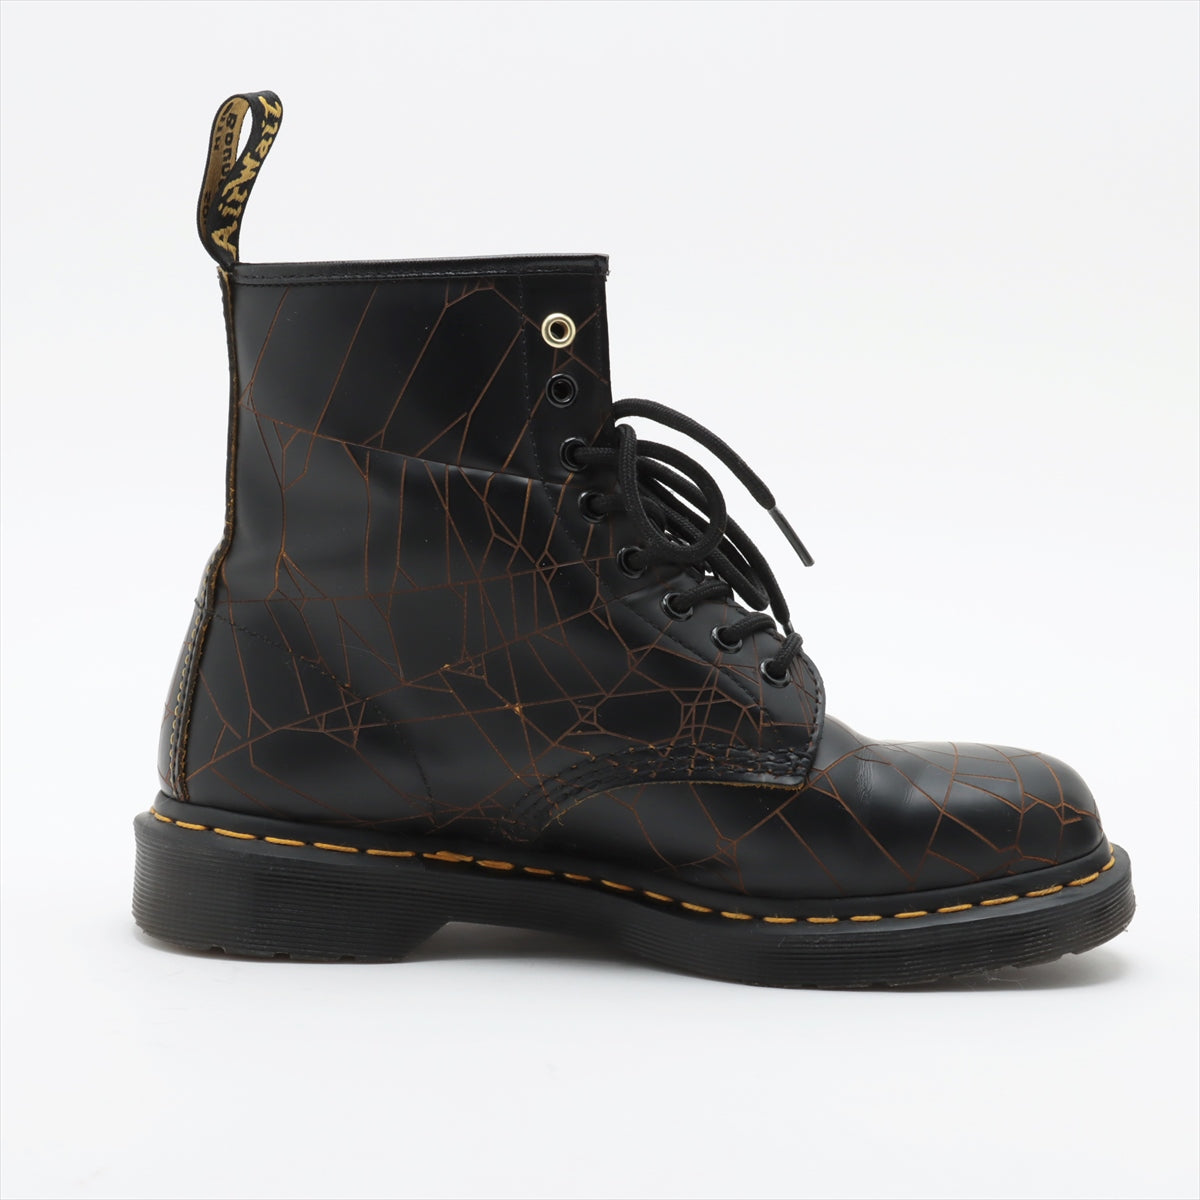 Dr. Martens x Yohji Yamamoto Leather Boots UK7 Men's Black 1460 Spider